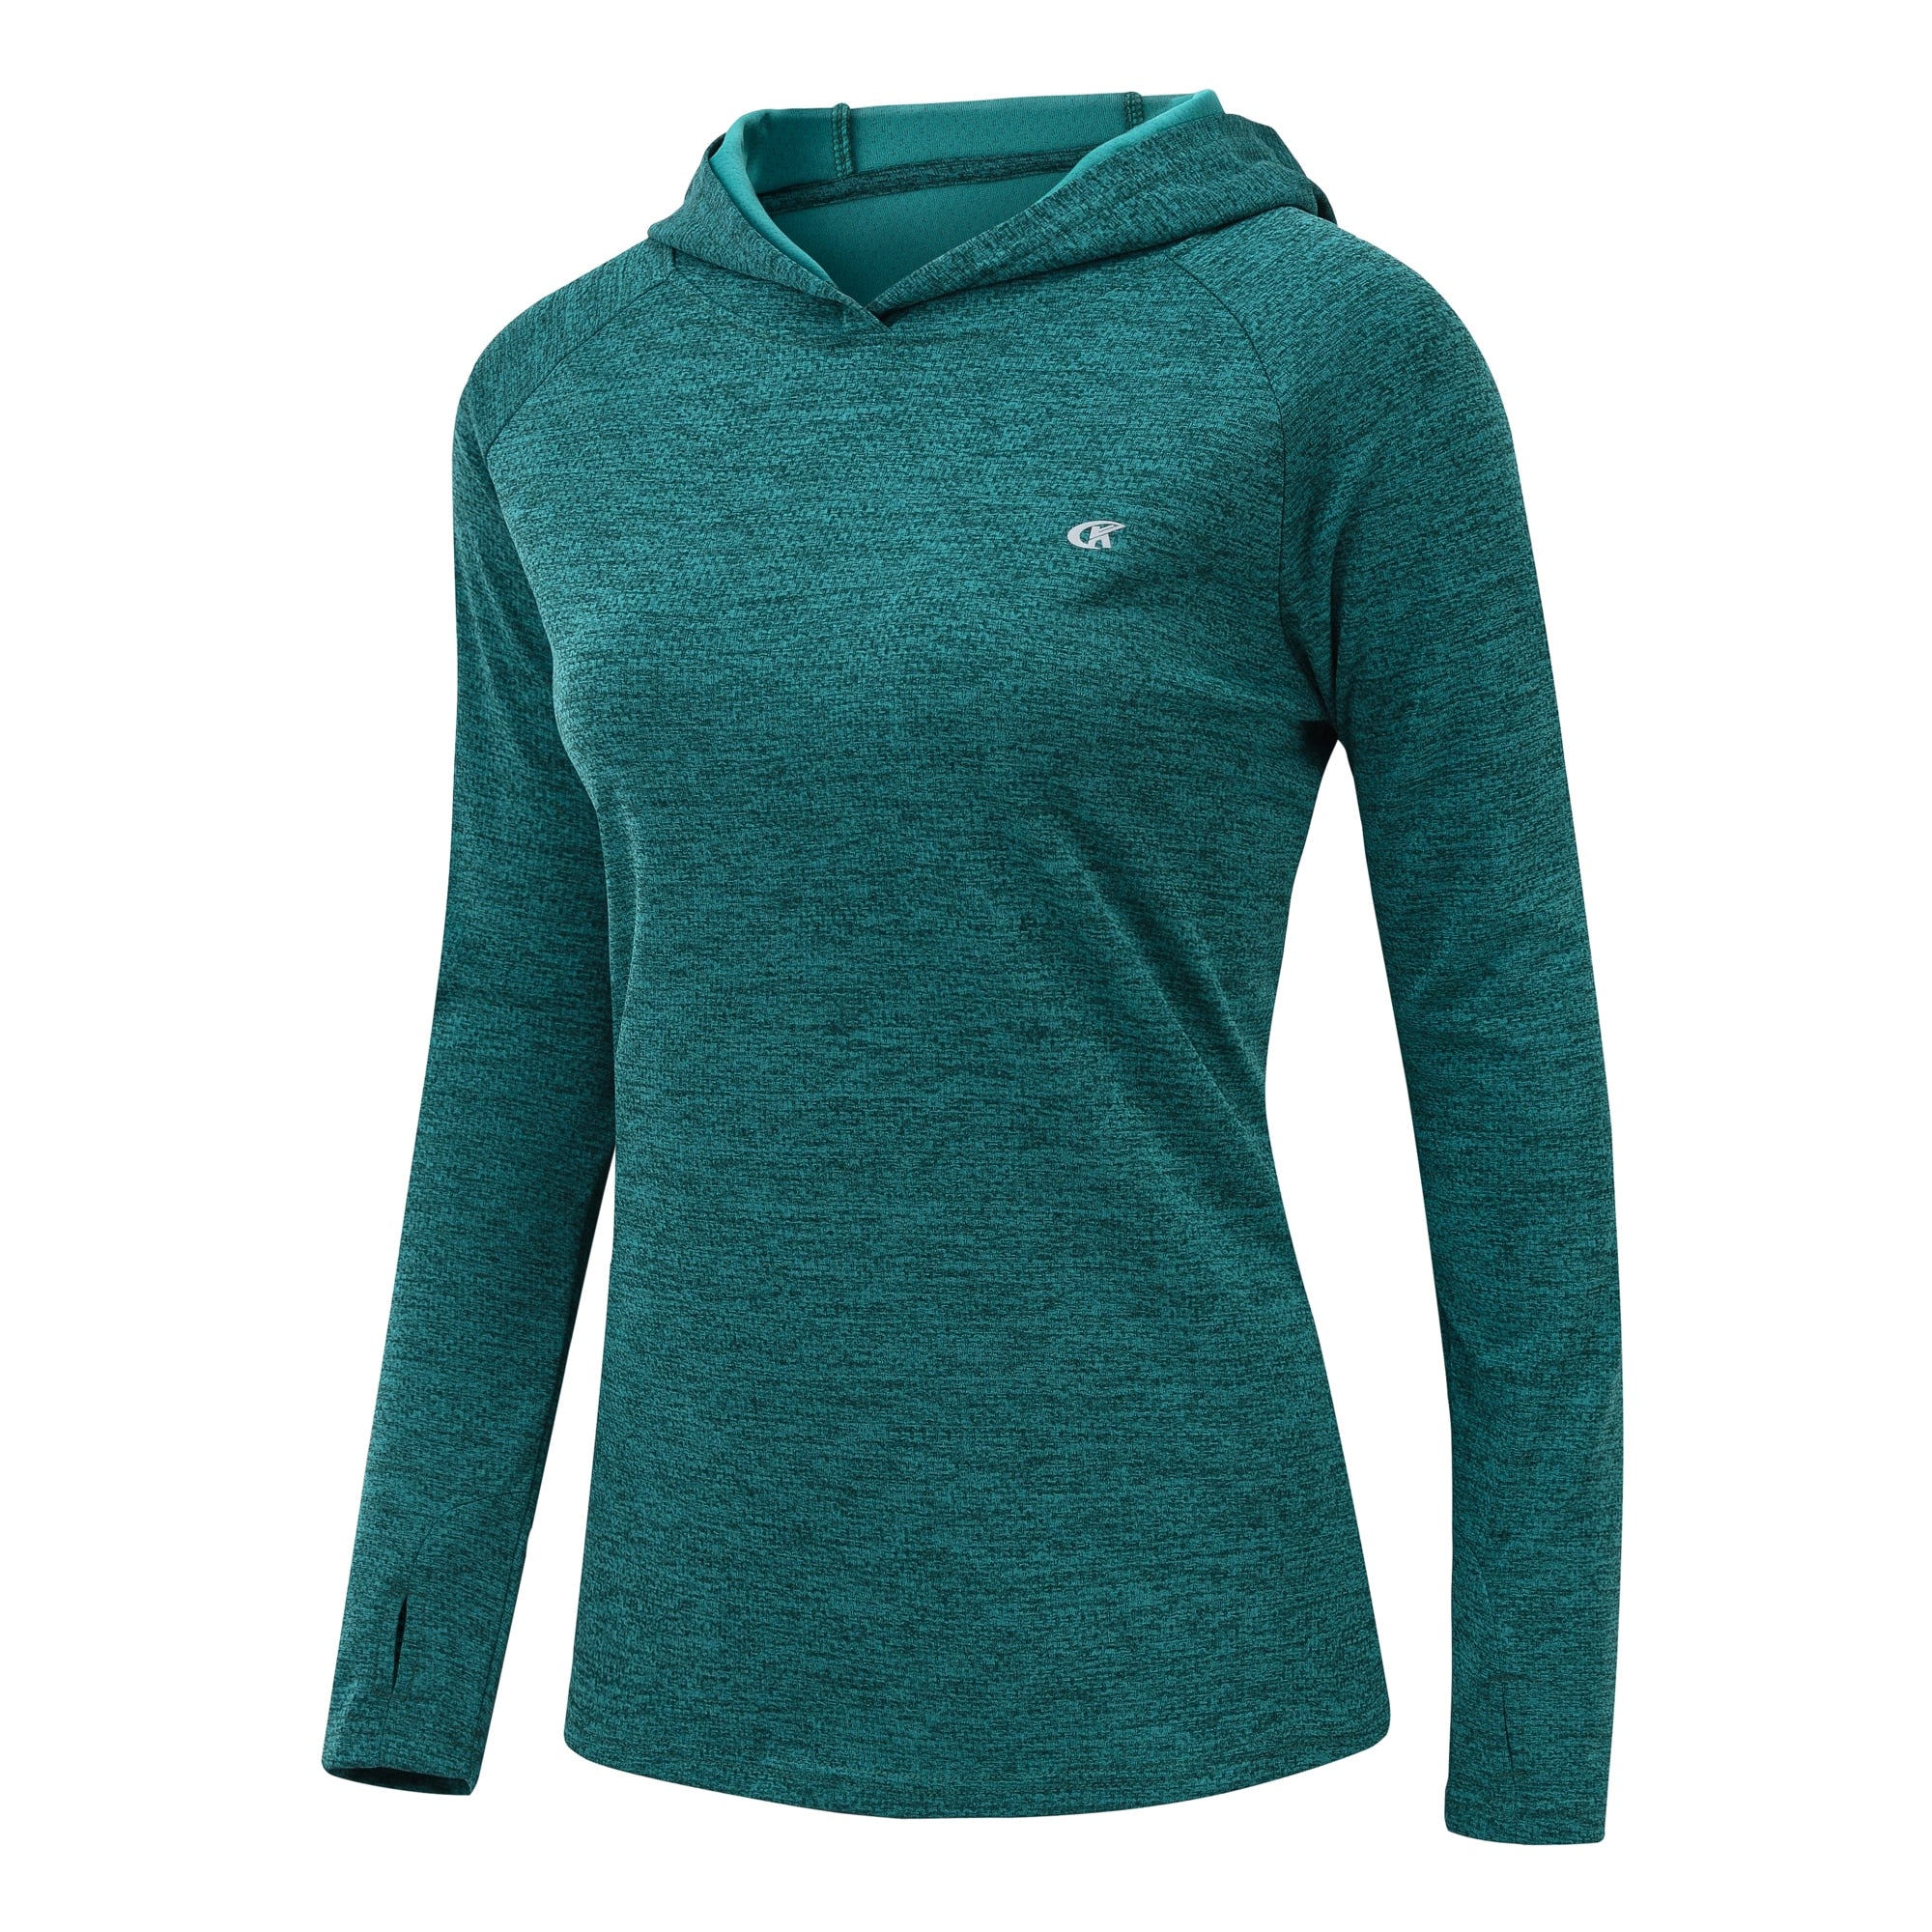 Comprar blackishgreen Hiking and Running Long Sleeve T-Shirt Rash Guard UPF 50+ Quick Dry Lightweight For women